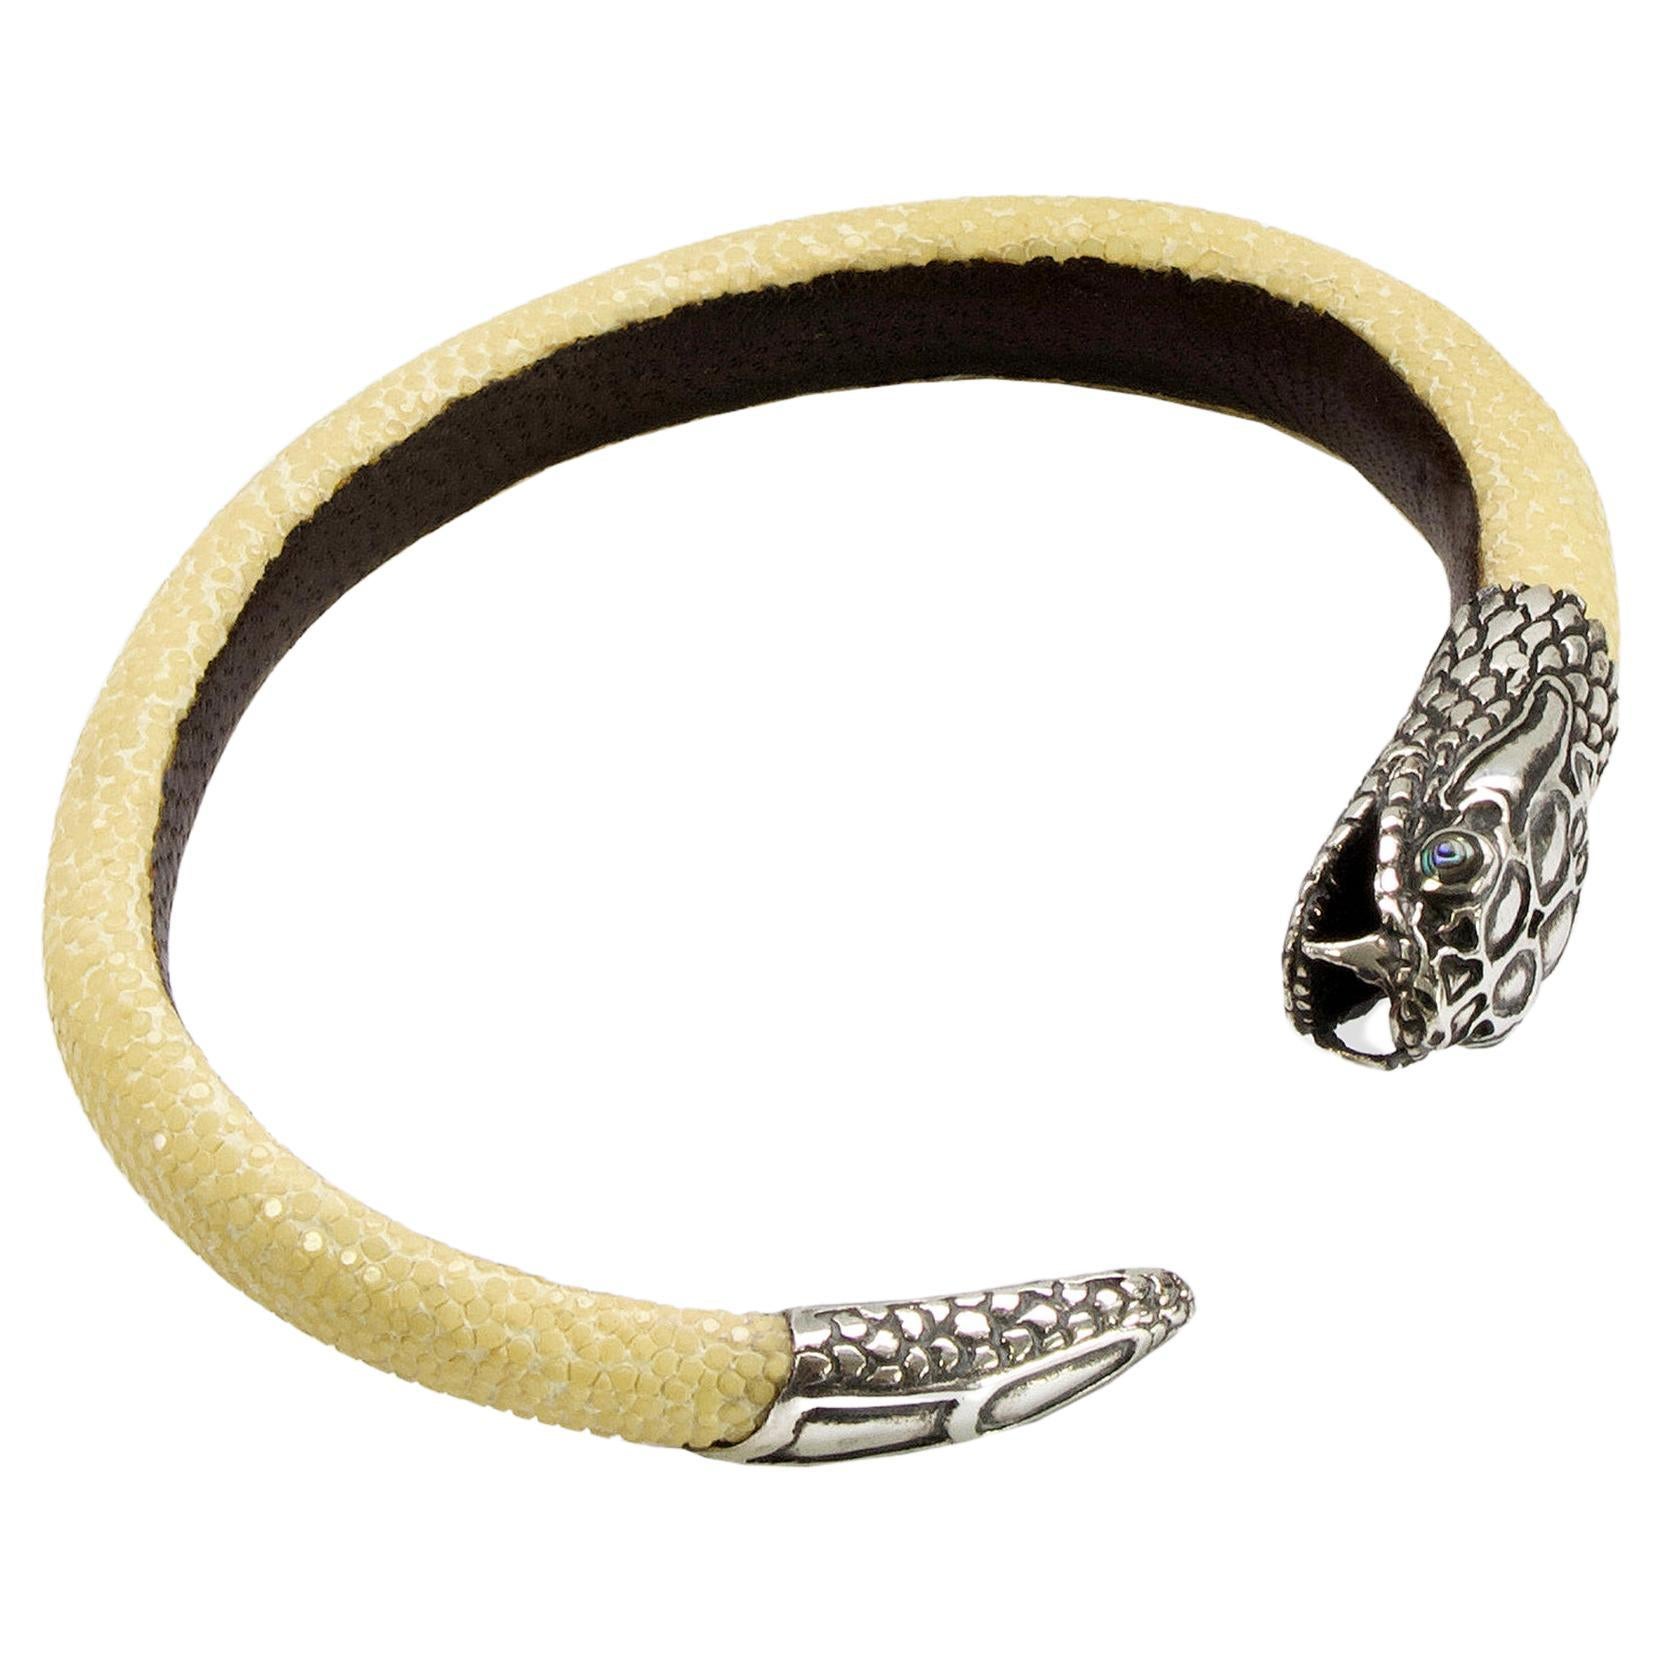 Lou Guerin Bracelet - Silver Snake Head Detail - Adjustable Leather Outer